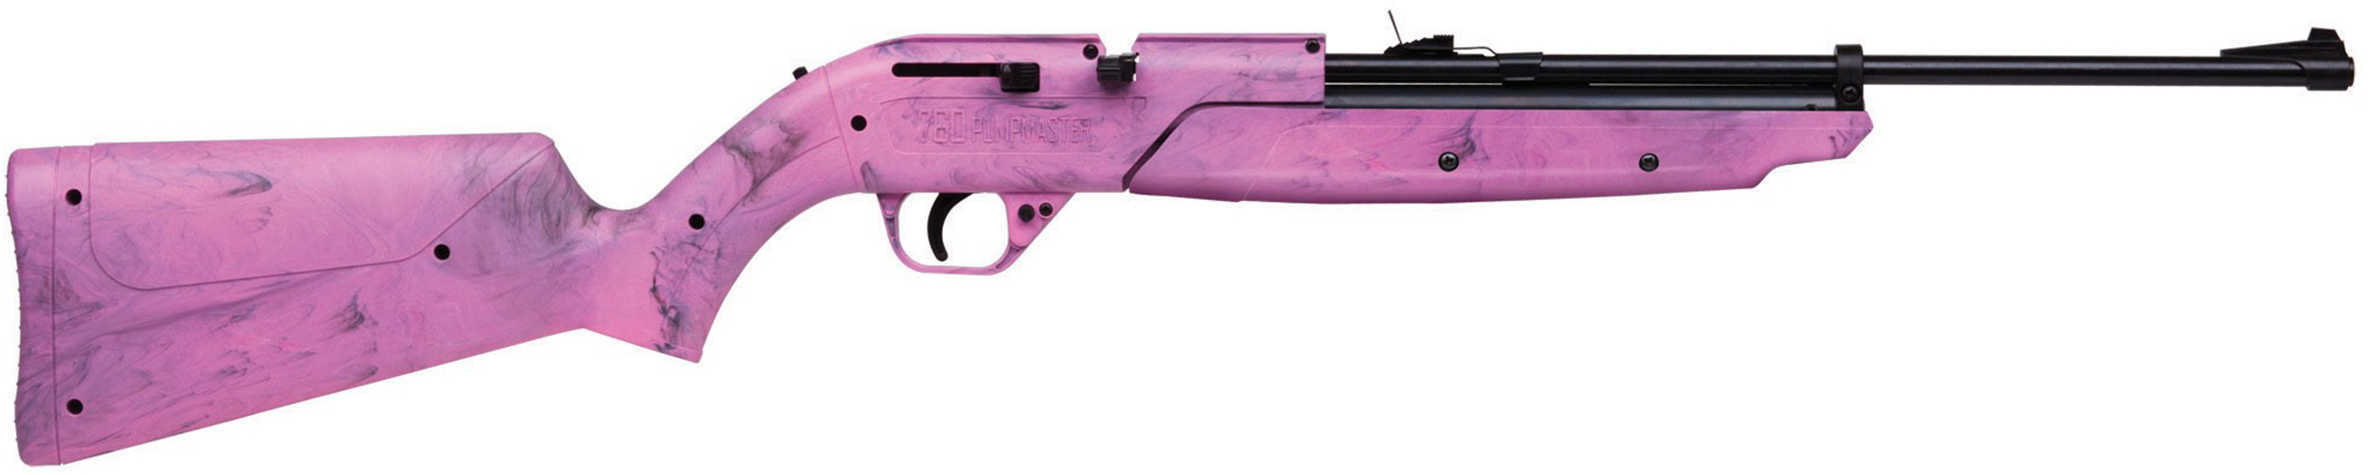 Crosman Pumpmaster Pink 177cal